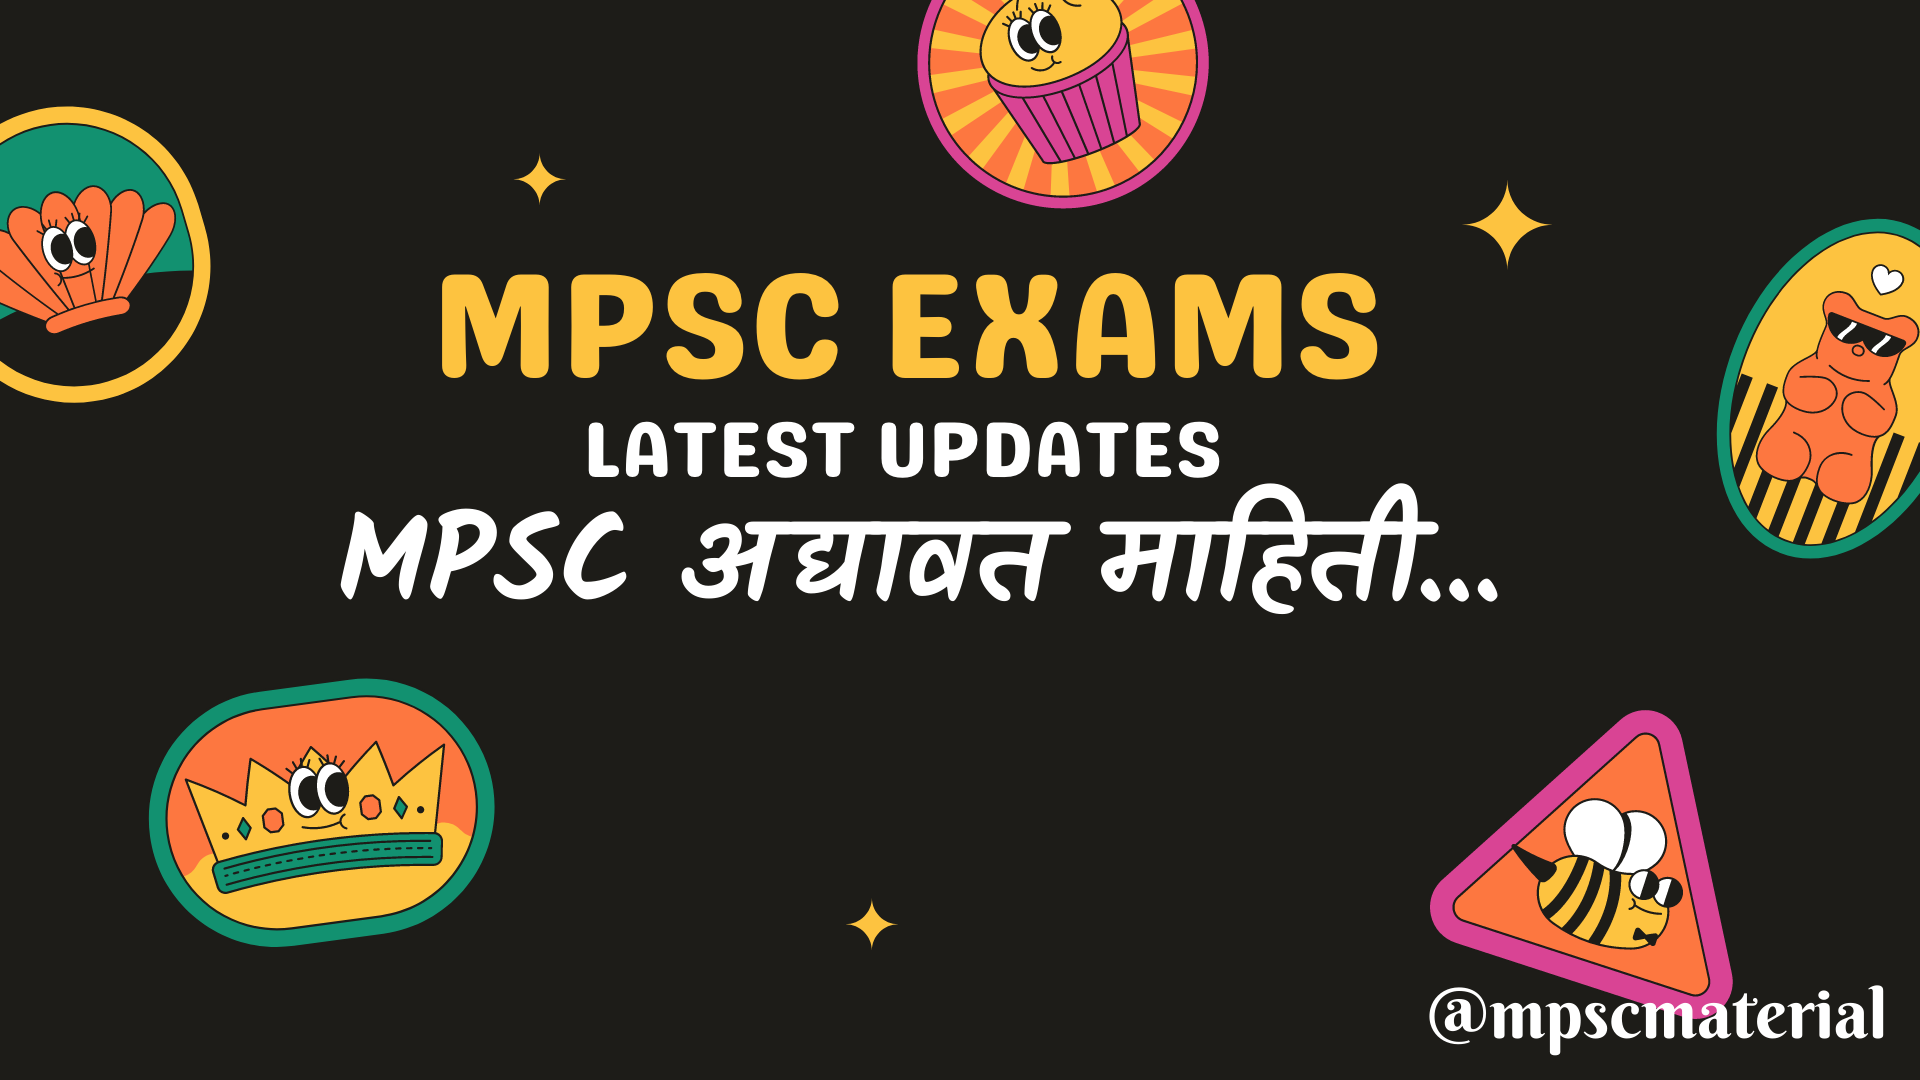 MPSC Exams Latest News